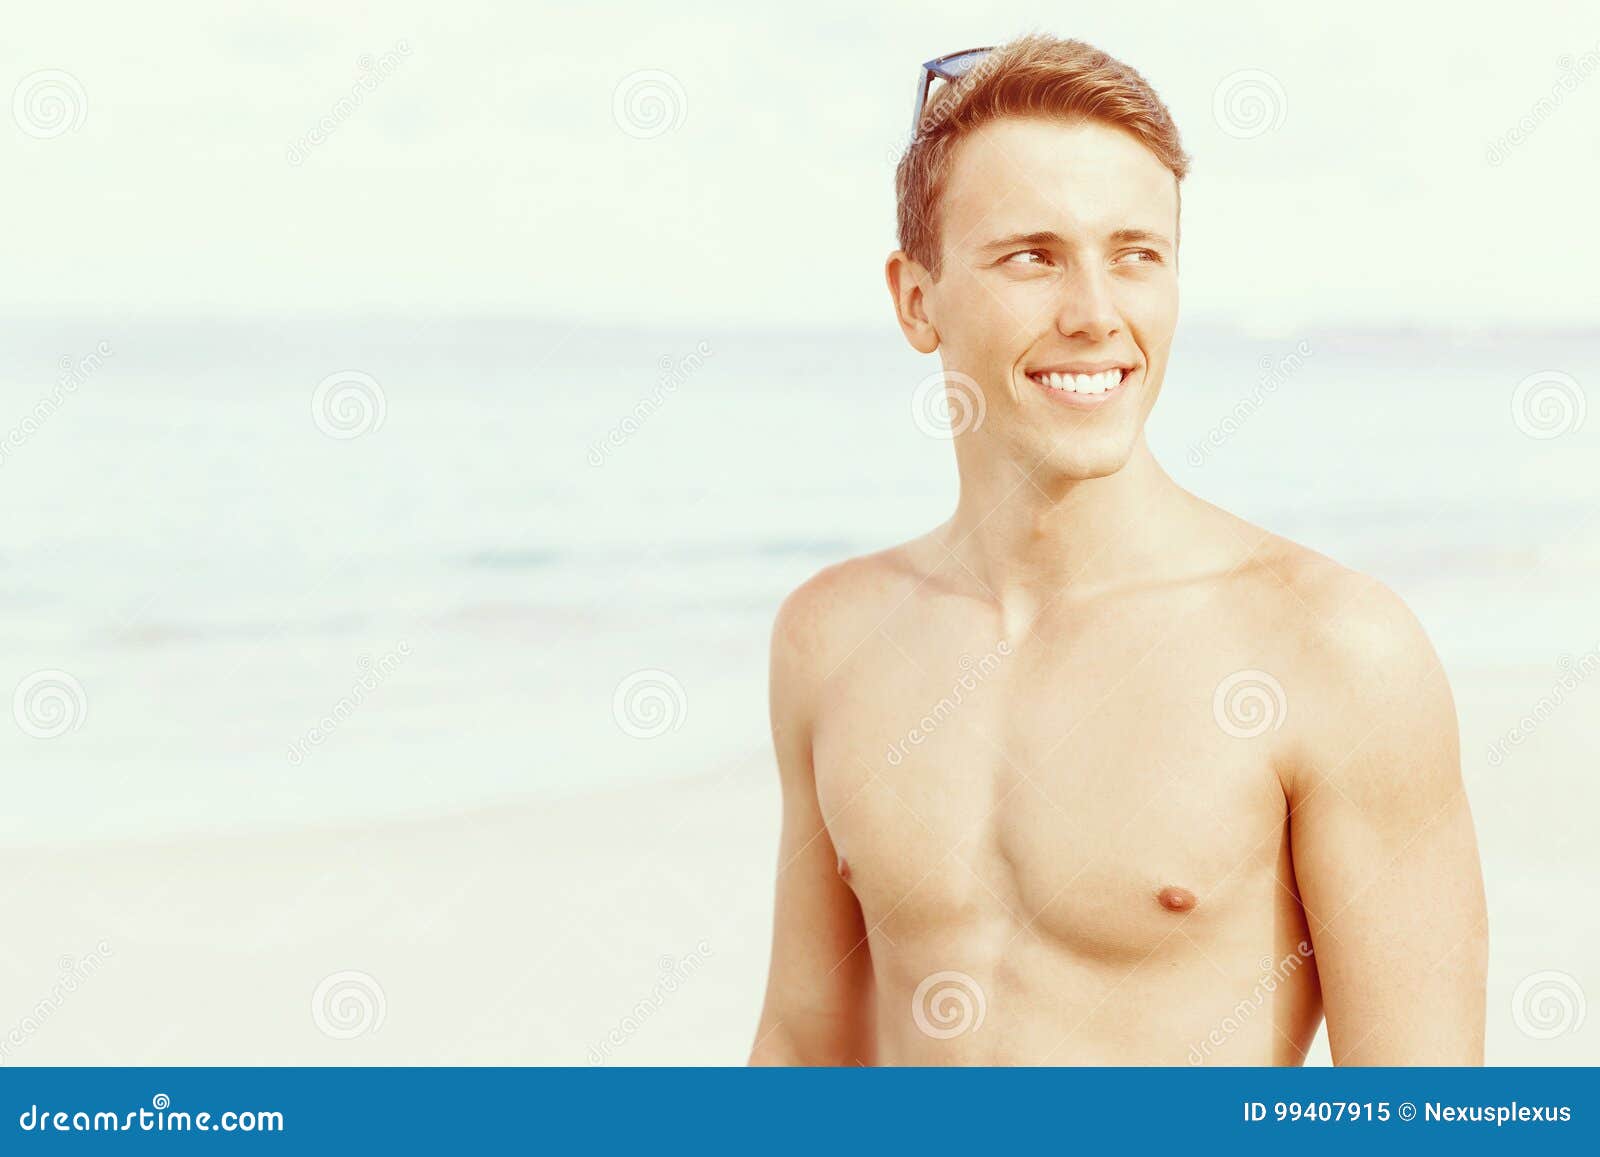 Handsome Man Posing at Beach Stock Image - Image of forward, beach ...